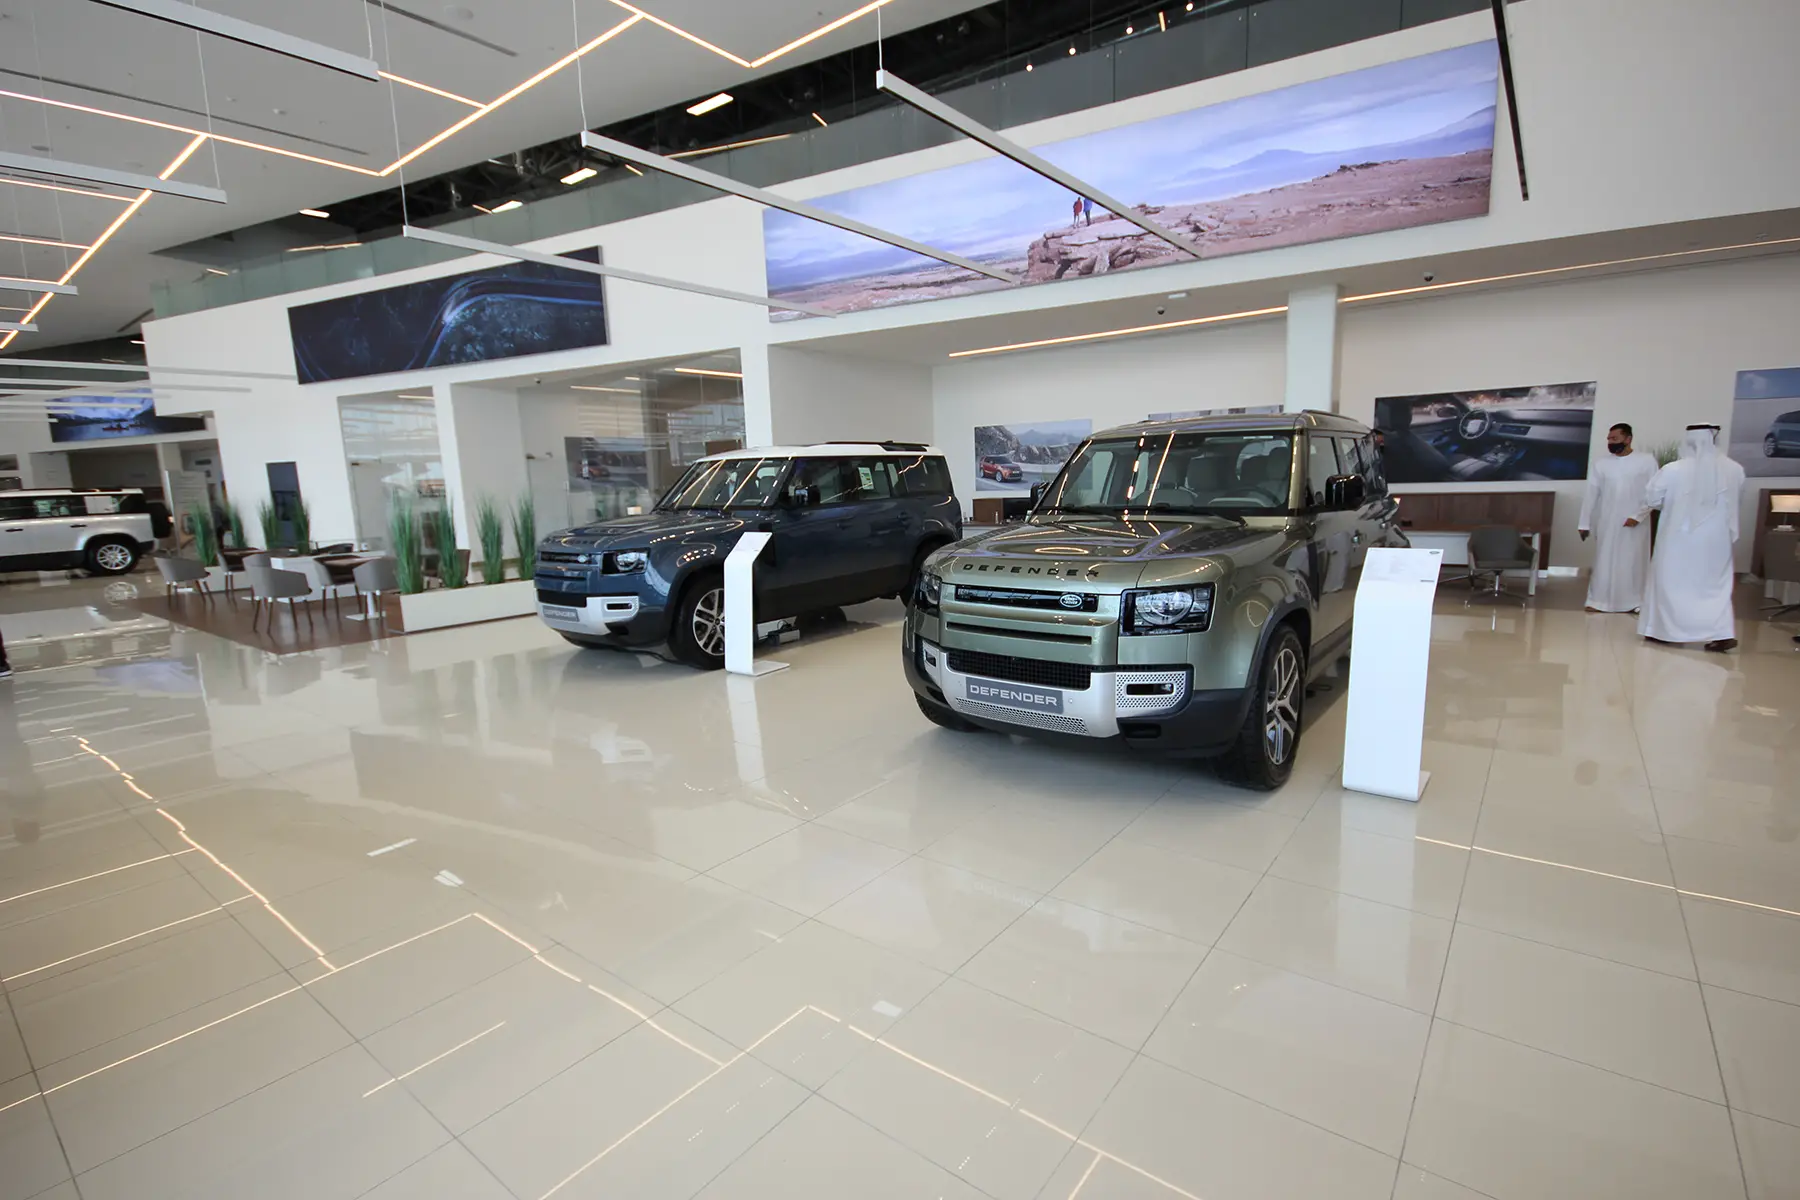 Land Rover dealership showroom in Dubai